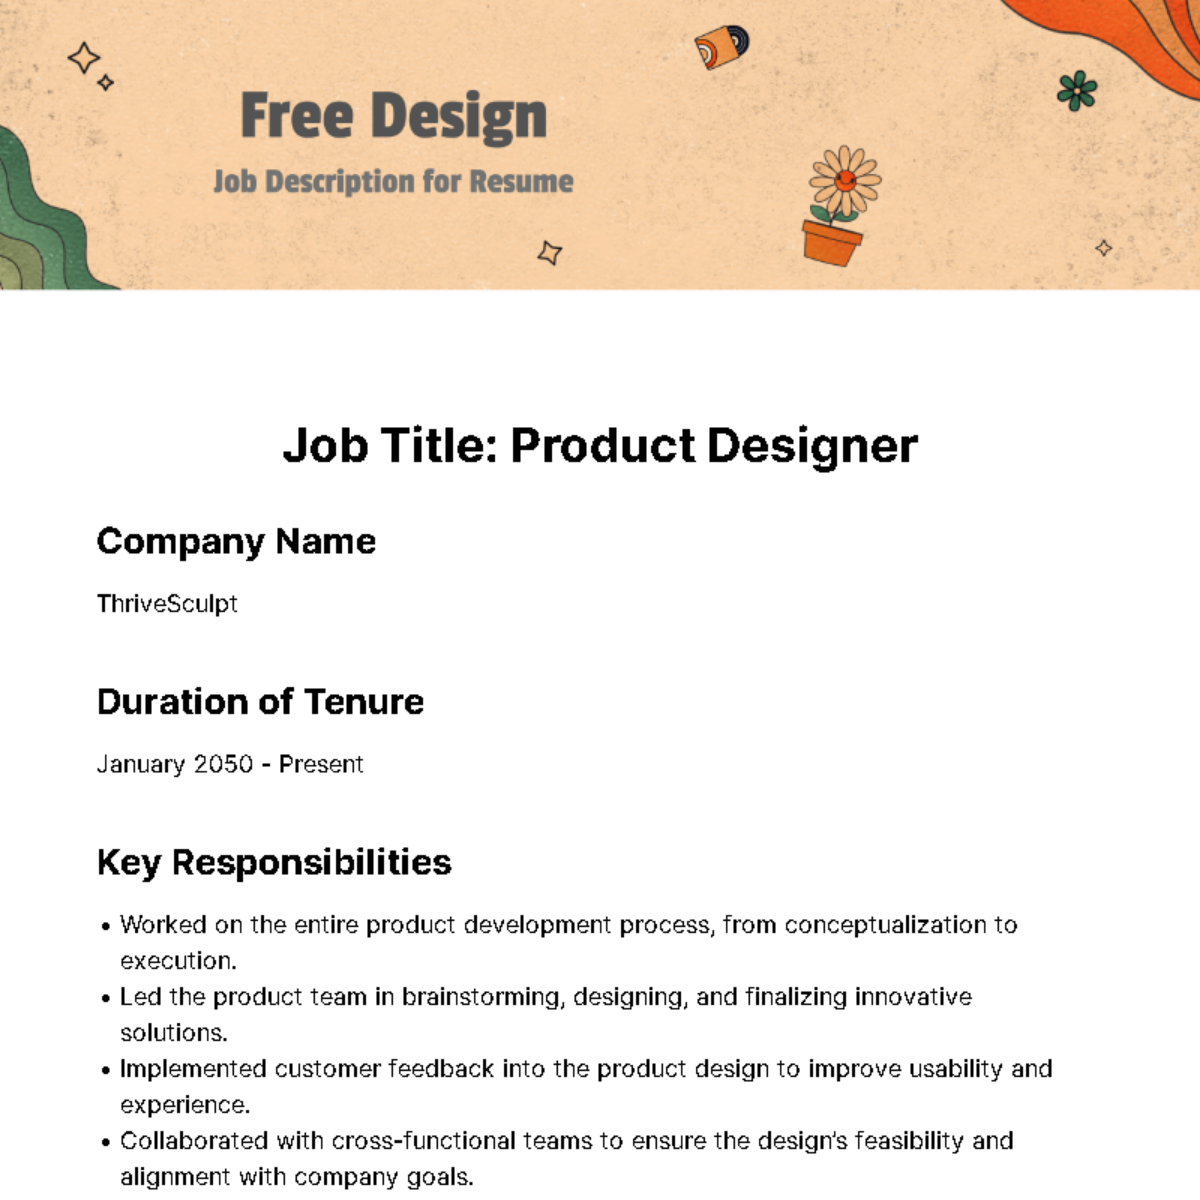 Free Design Job Description for Resume Template